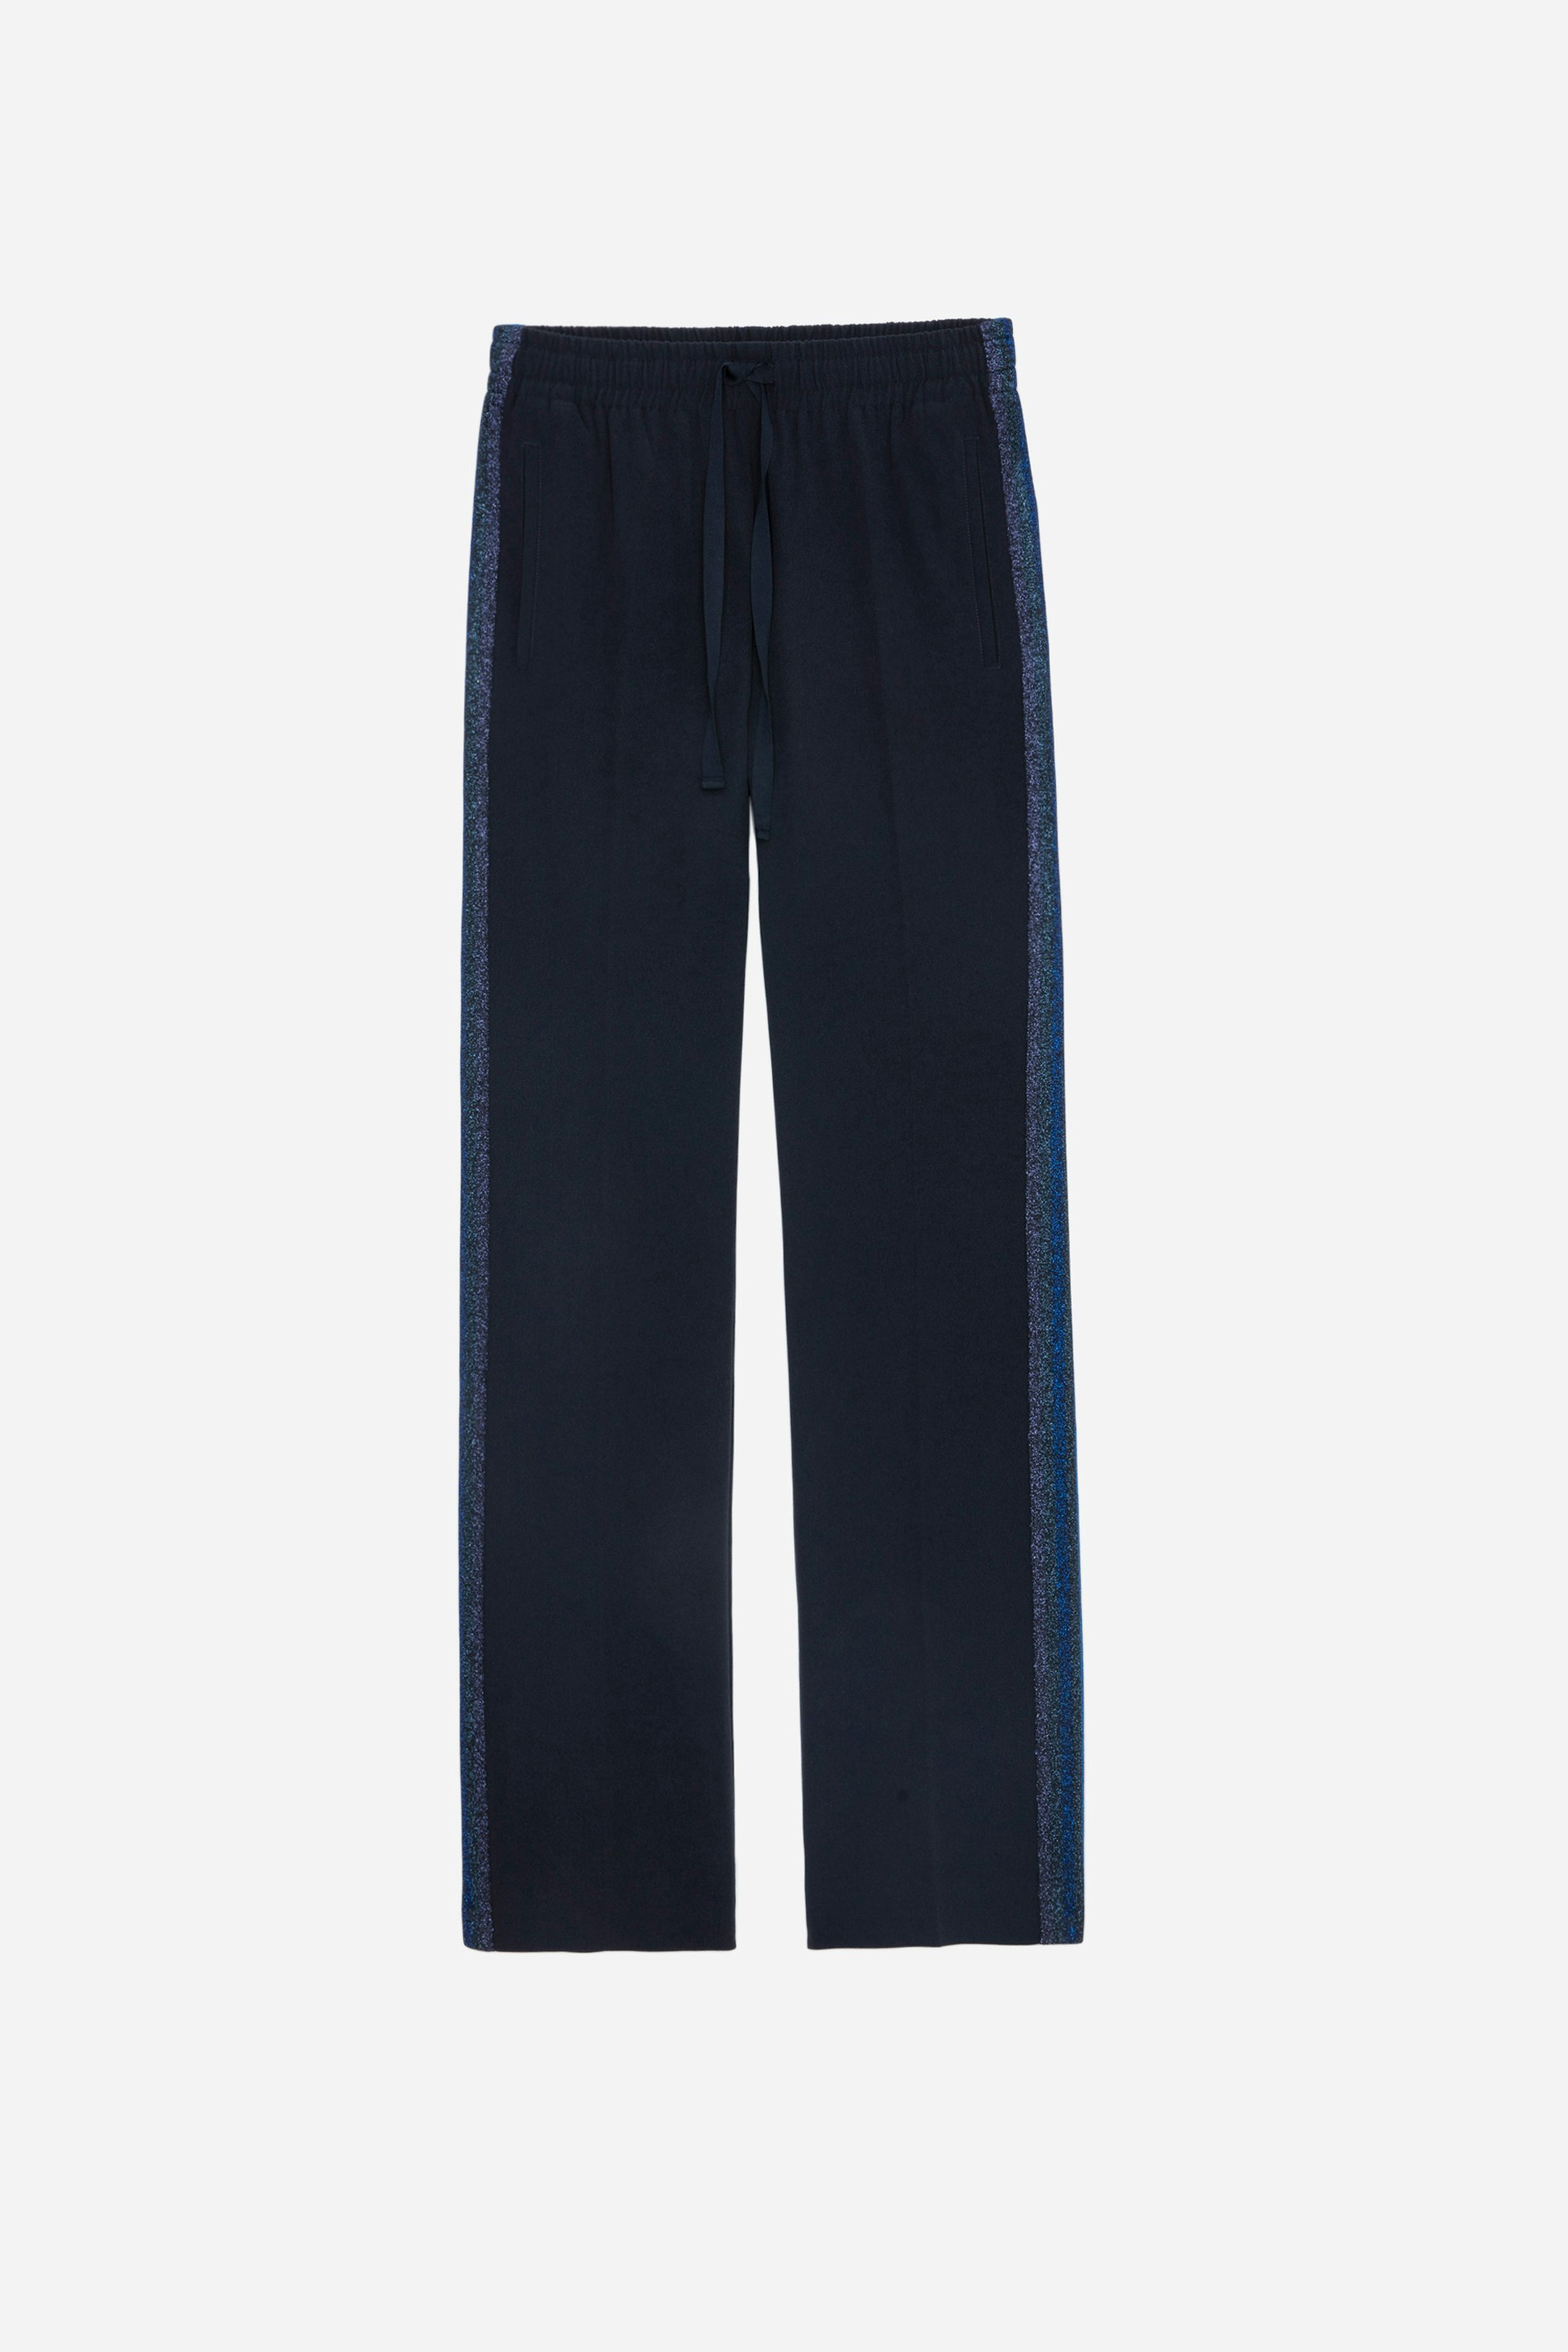 Pantalon Pomy - Pantalon en crêpe bleue marine à bandes latérales pailletées.